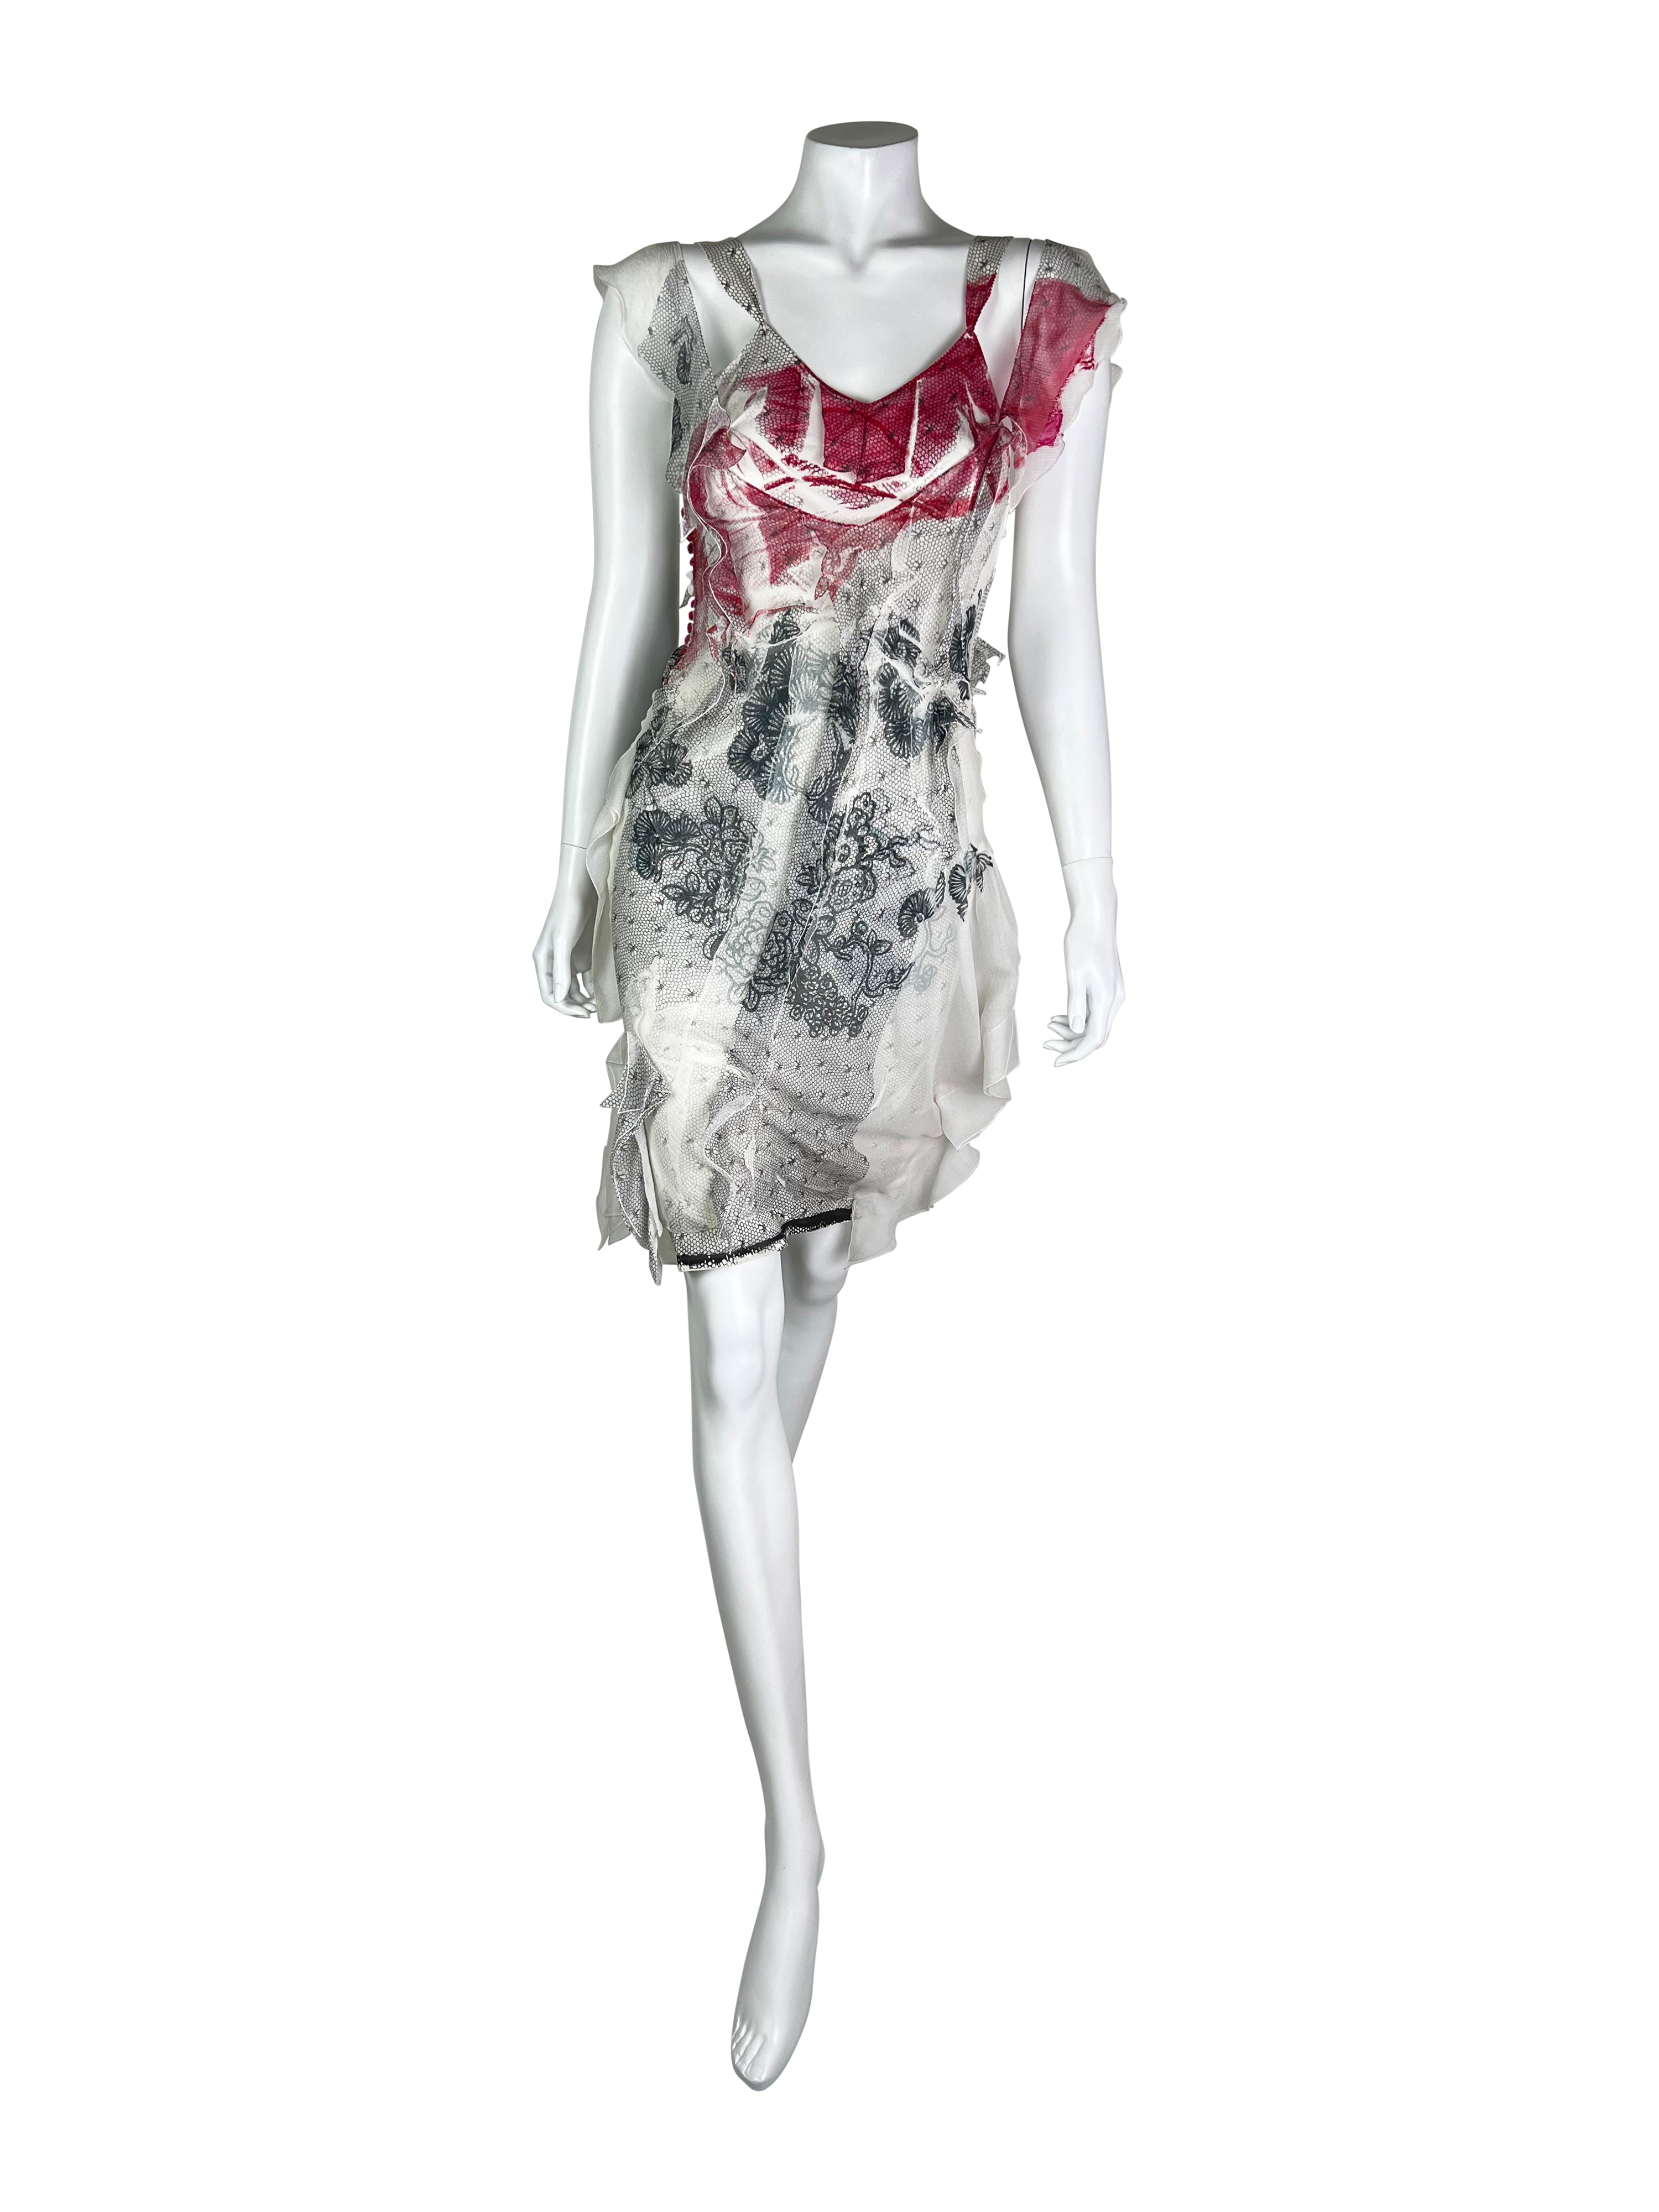 Dior by John Galliano Spring 2006 Silk Dress